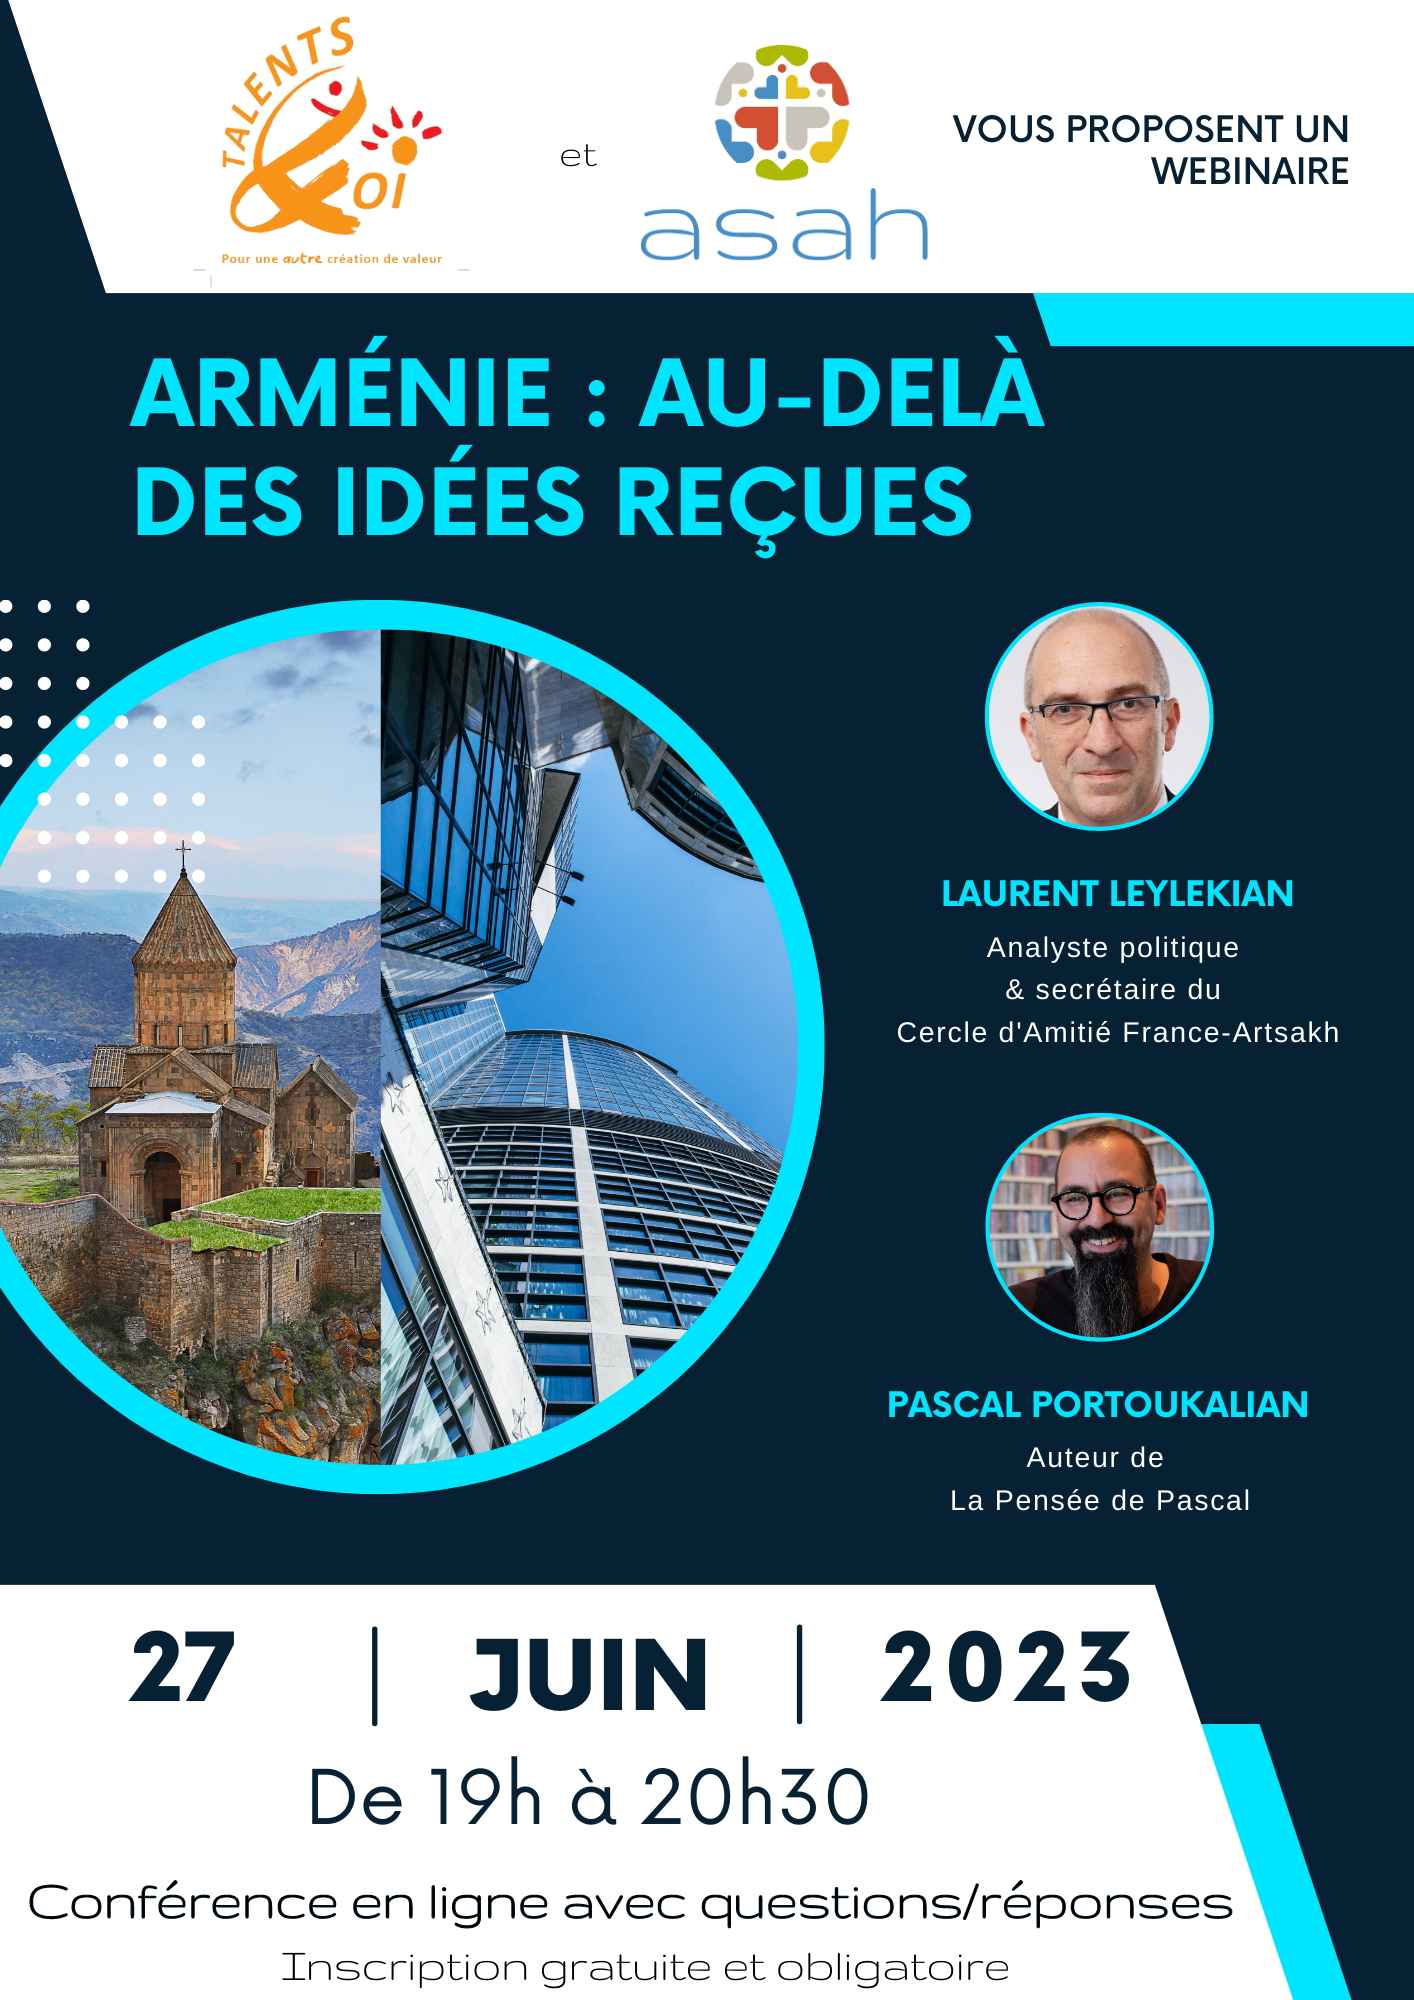 Invitation to a webinar: Armenia, beyond received ideas